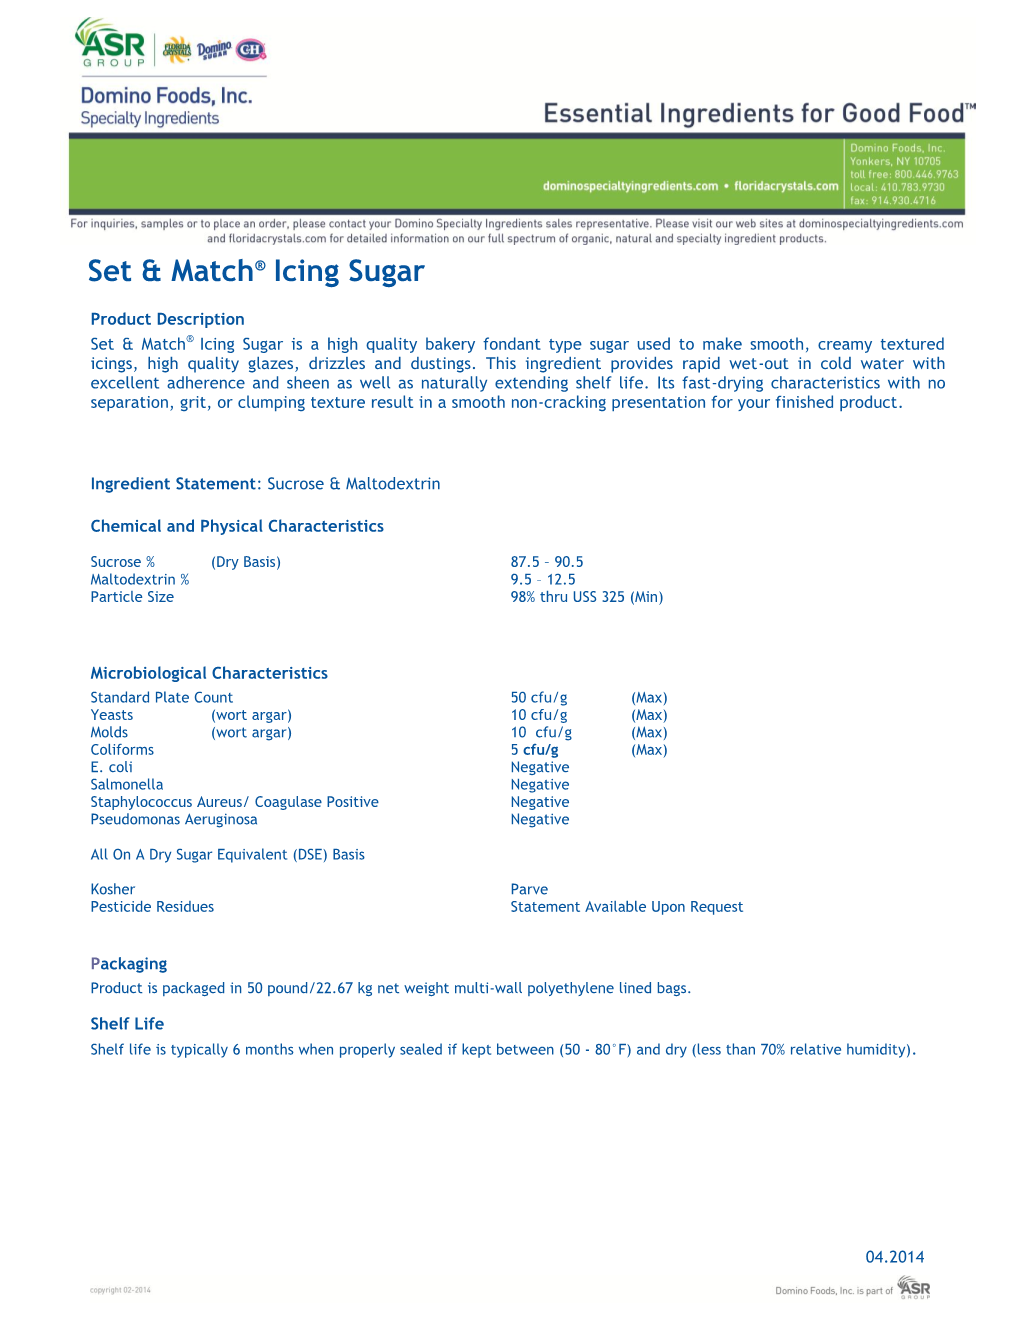 Set & Match® Icing Sugar